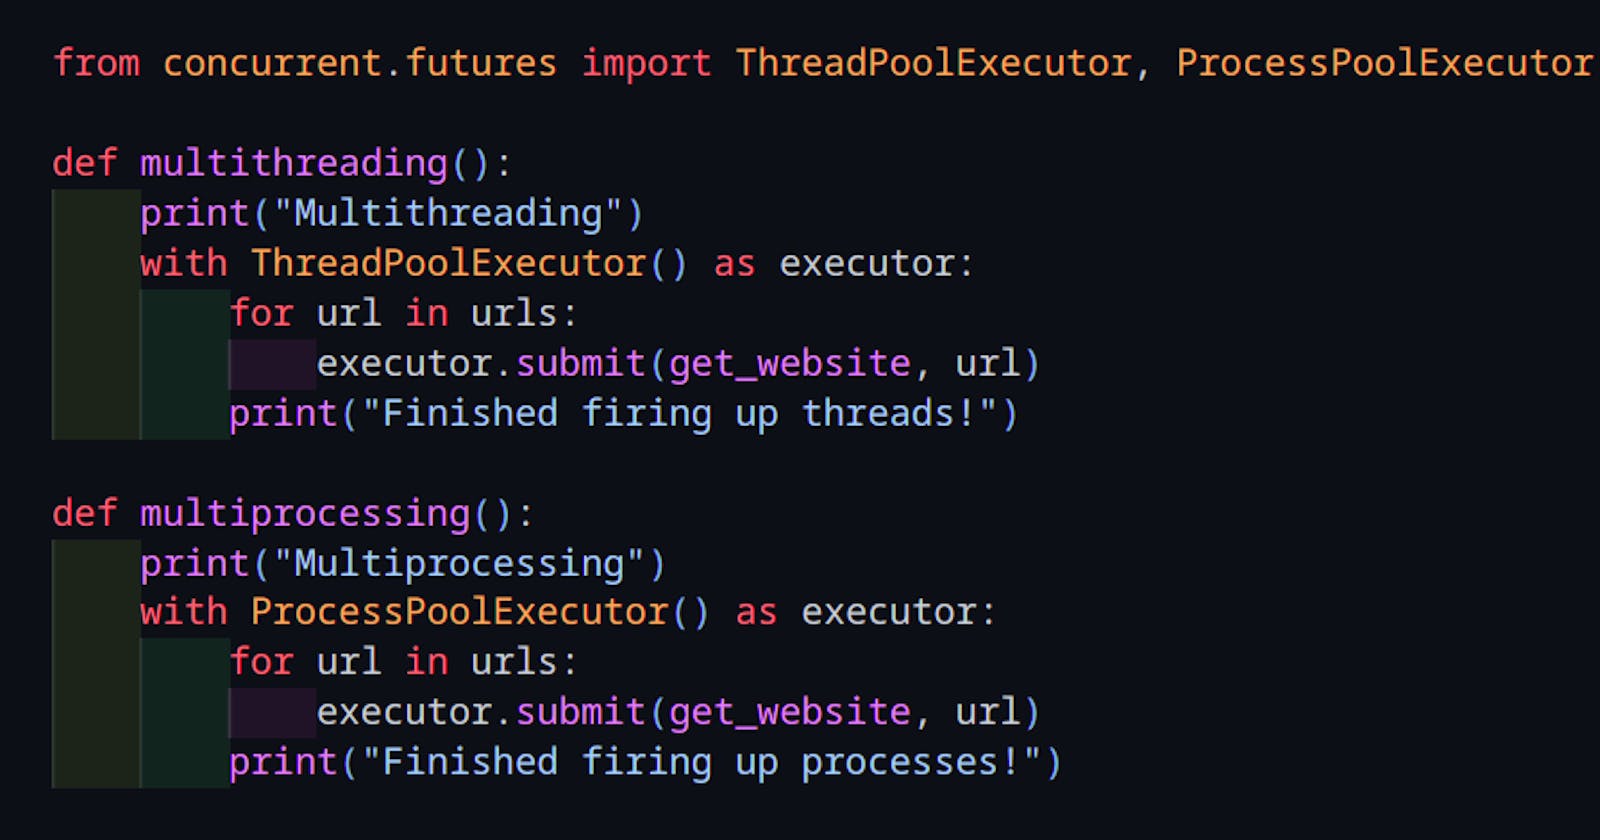 Code Execution: Single Threading vs Multithreading vs Multiprocessing